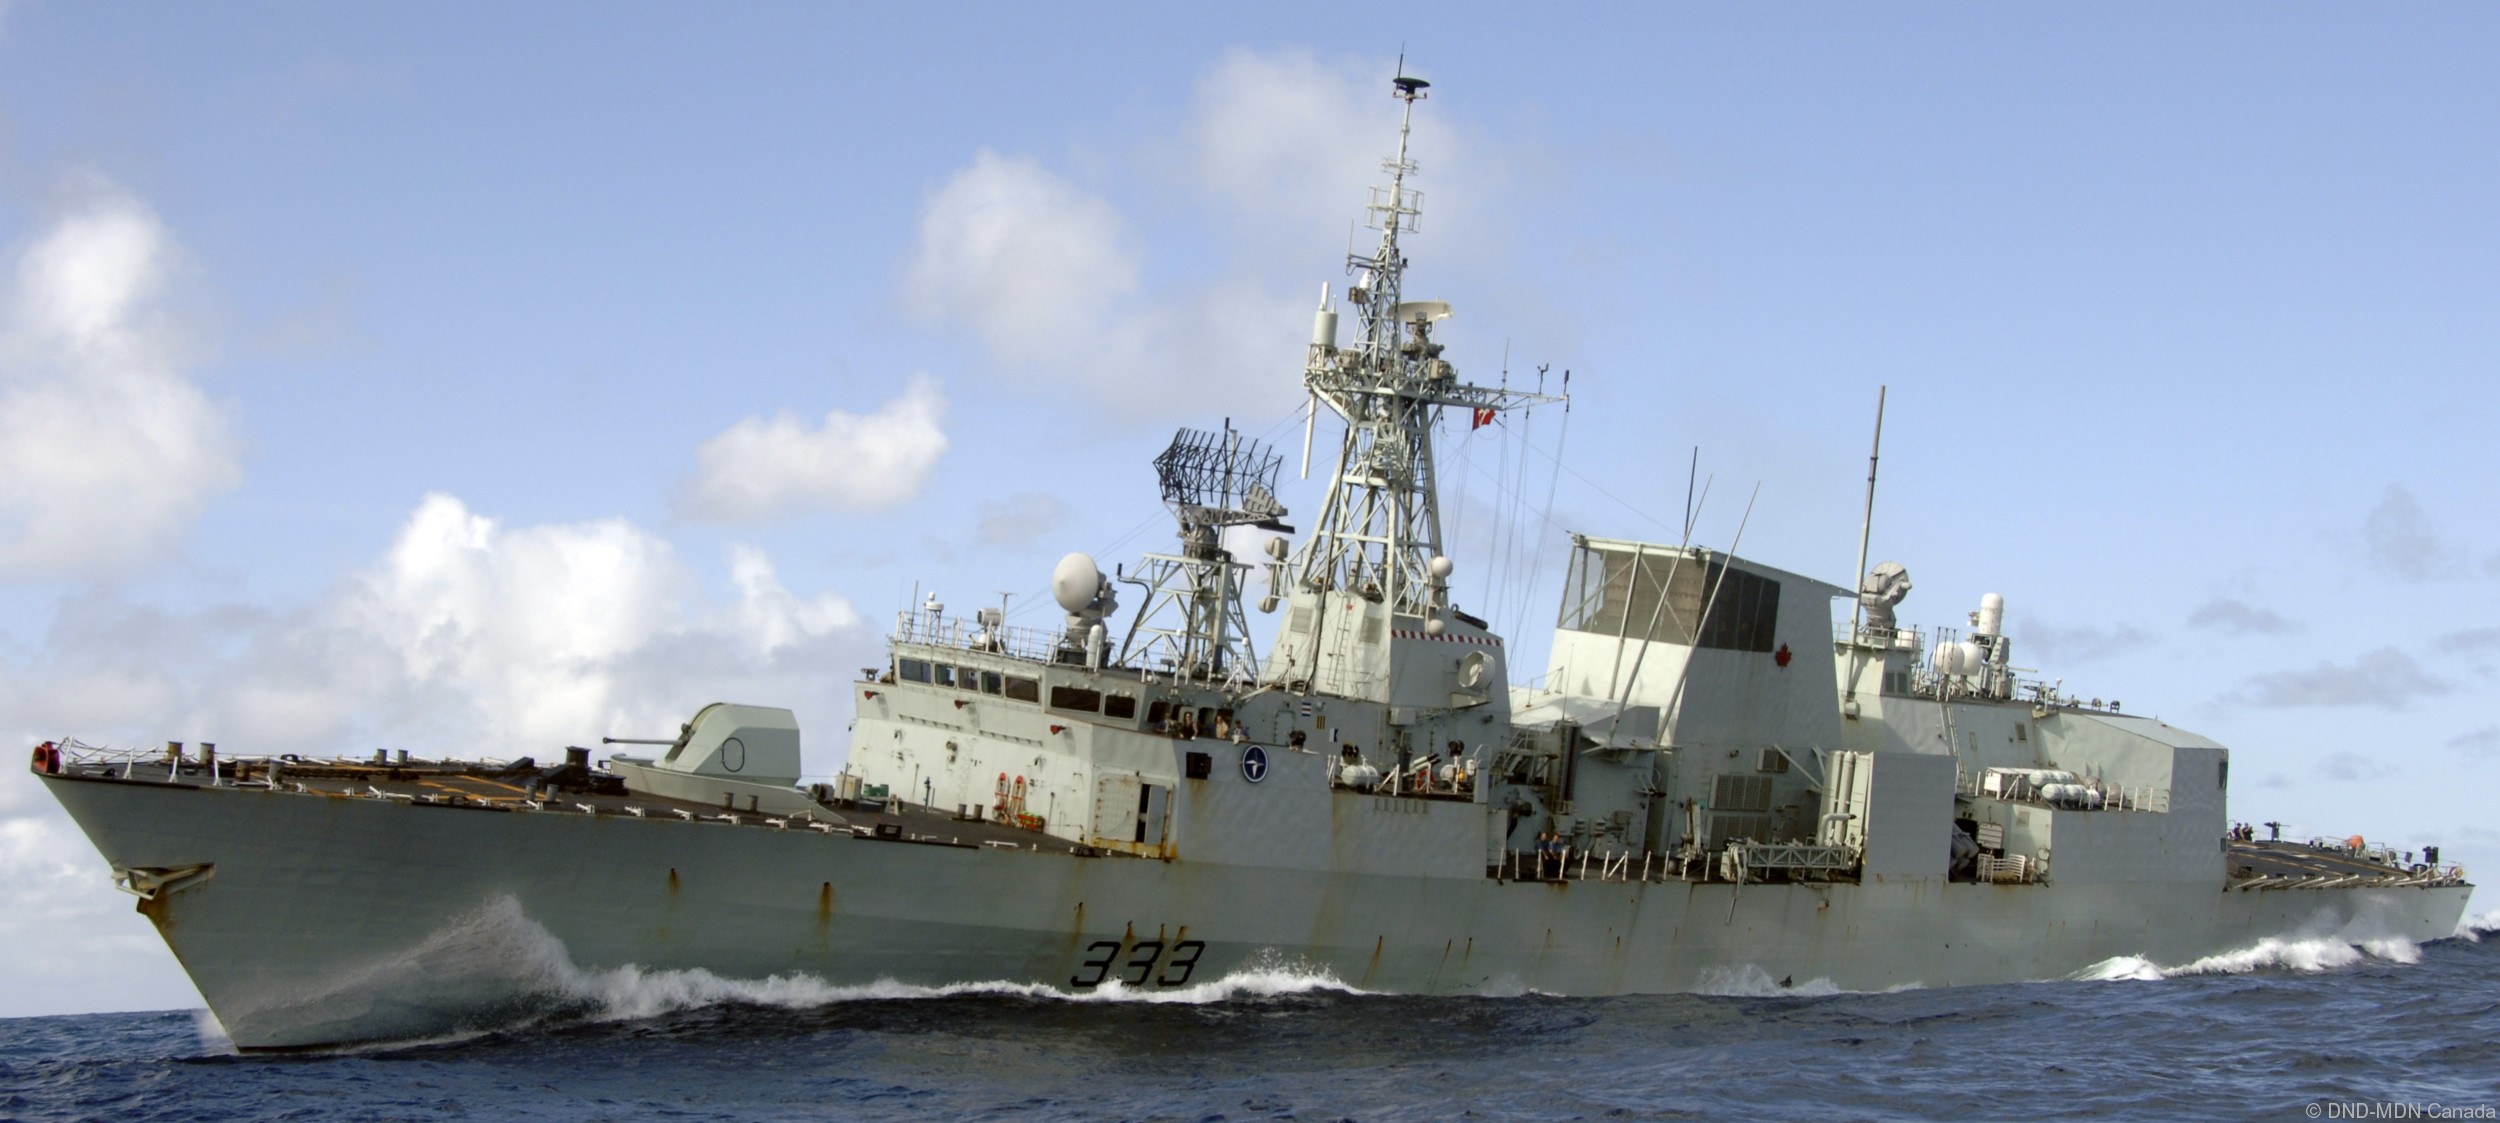 ffh-333 hmcs toronto halifax class helicopter patrol frigate ncsm royal canadian navy 57